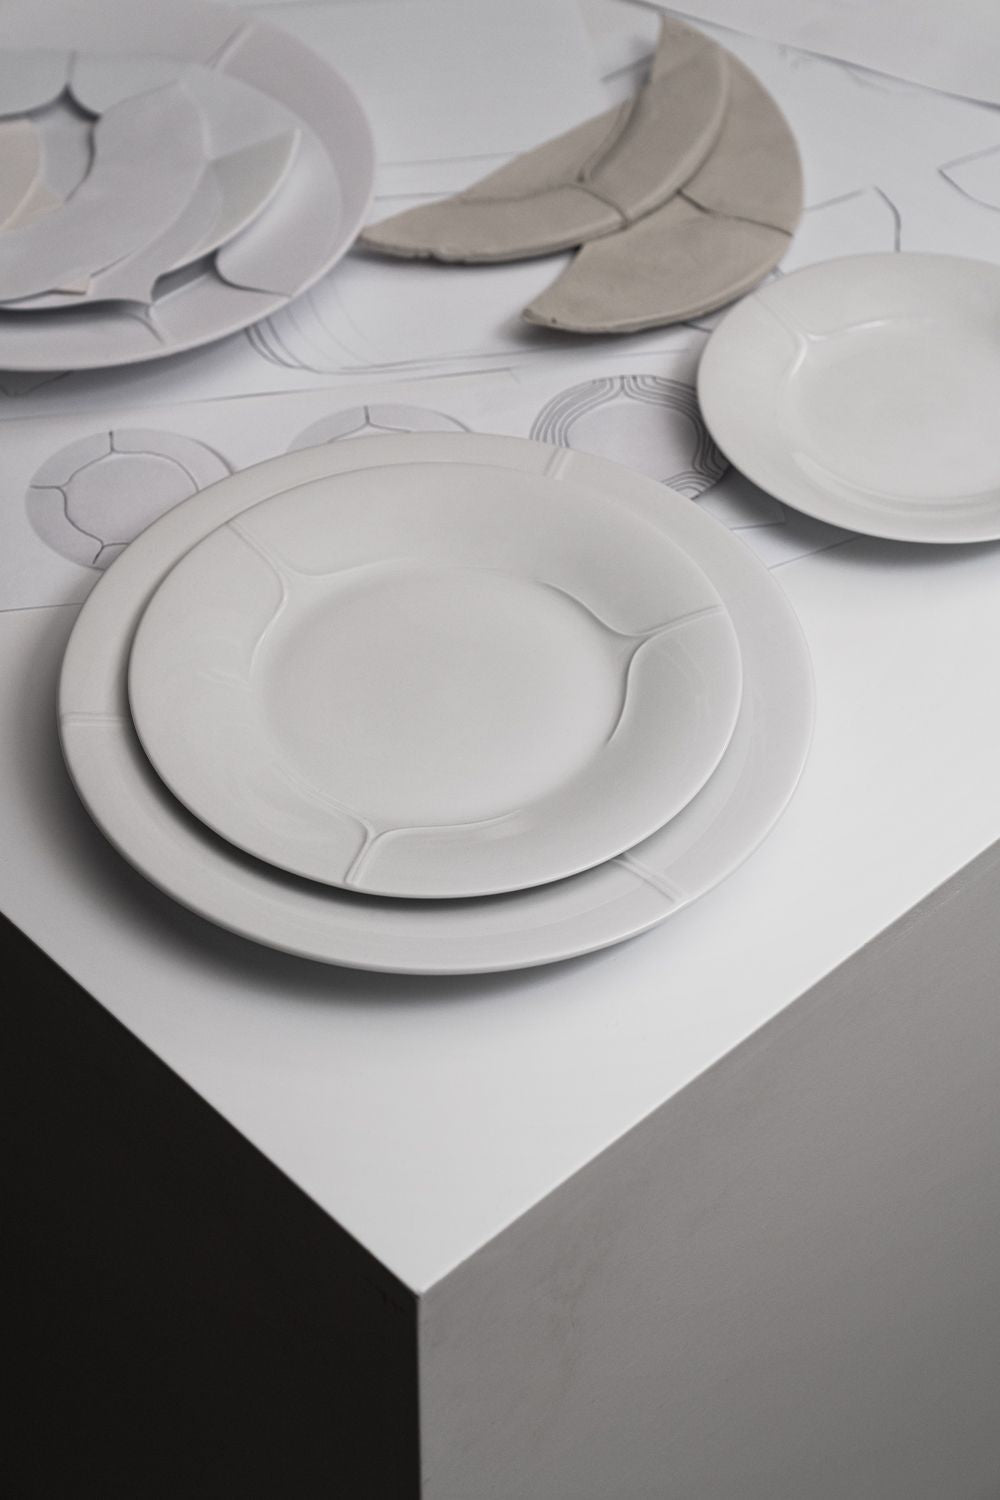 Rörstrand Plate Pli Blanc, 21 cm